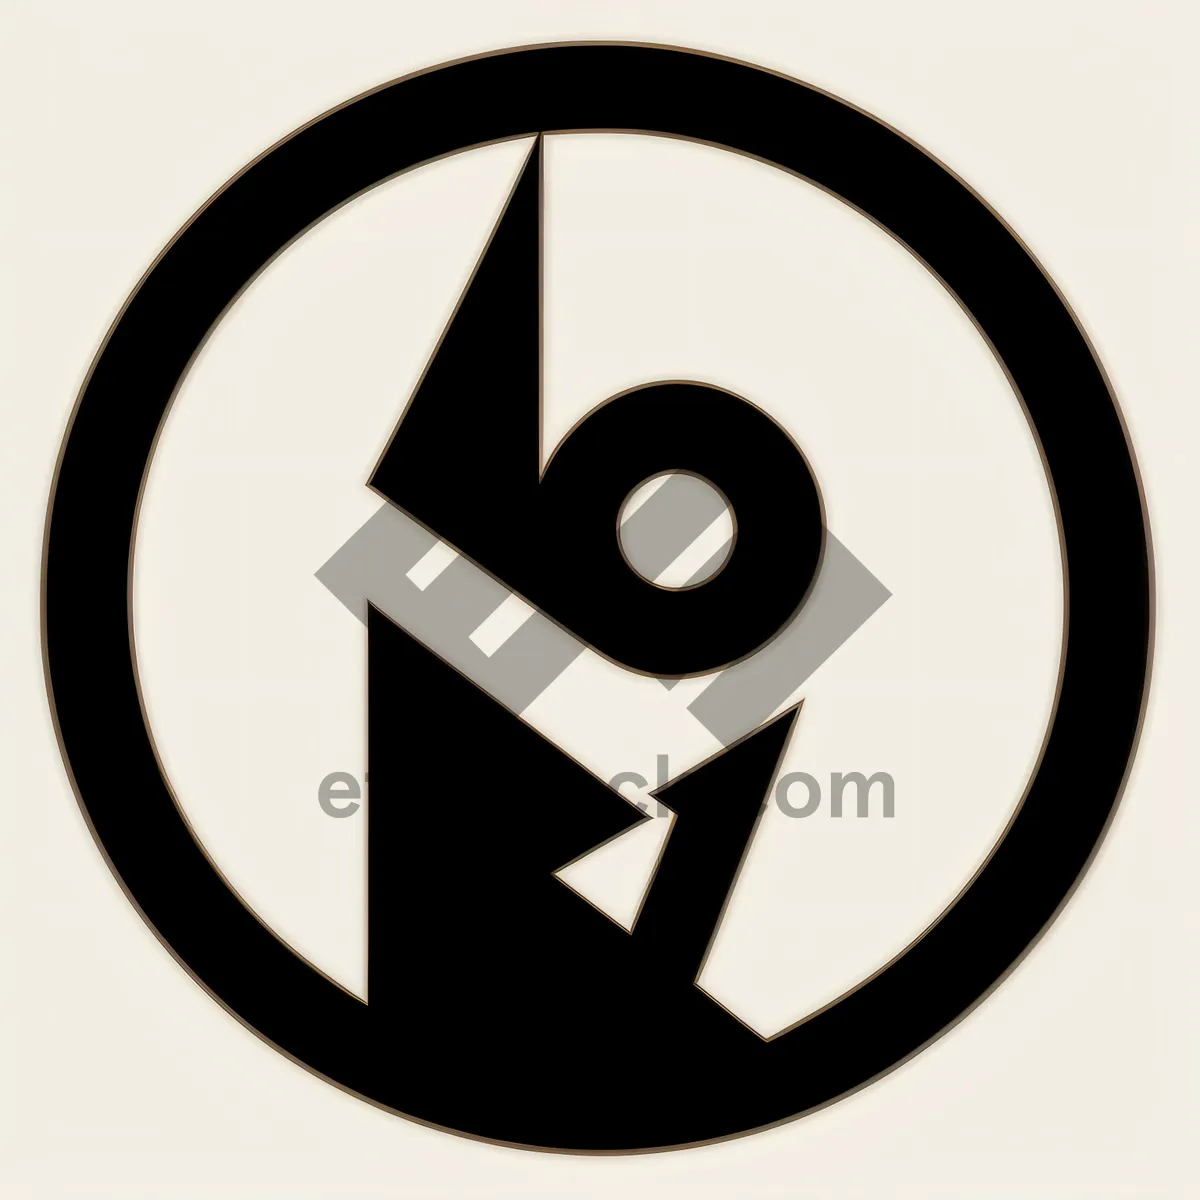 Picture of Glossy Web Icon Set - Round Button Symbols